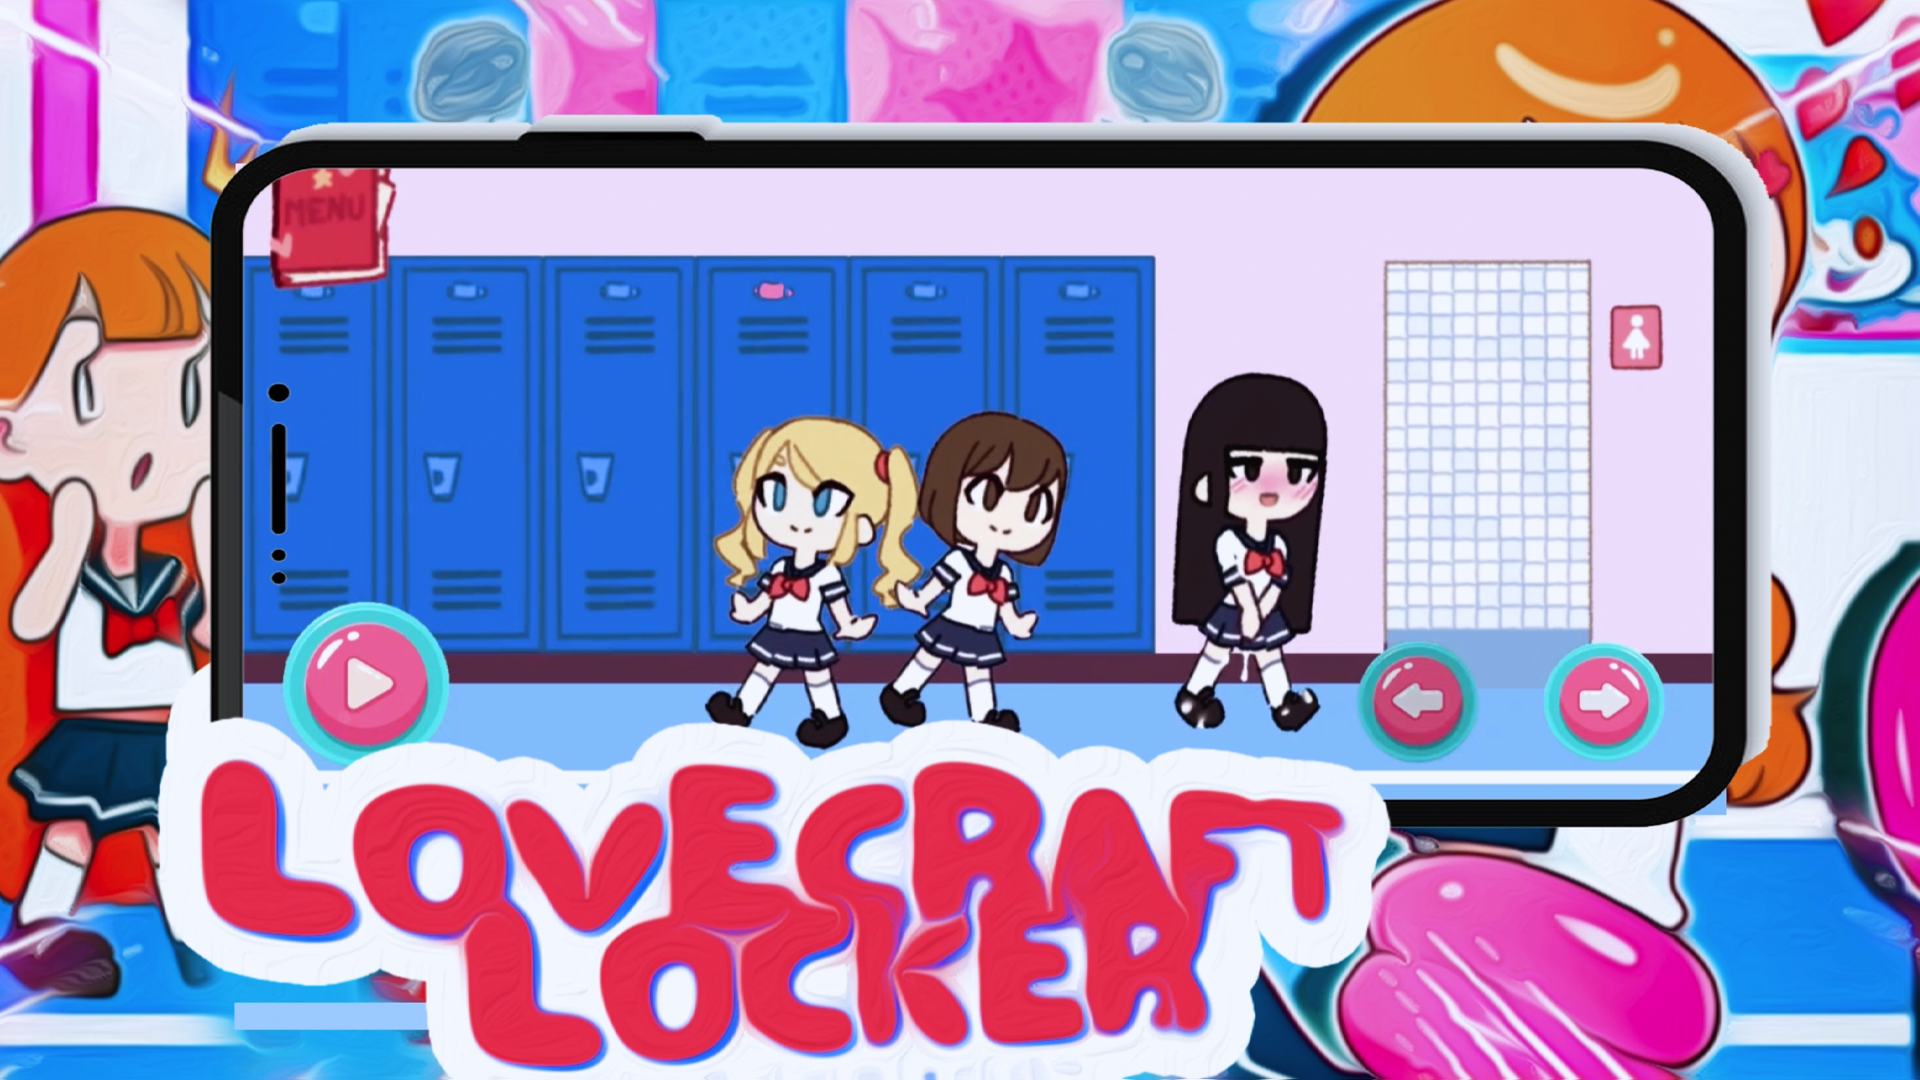 Screenshot 1 of เกม LoveCraft Locker 